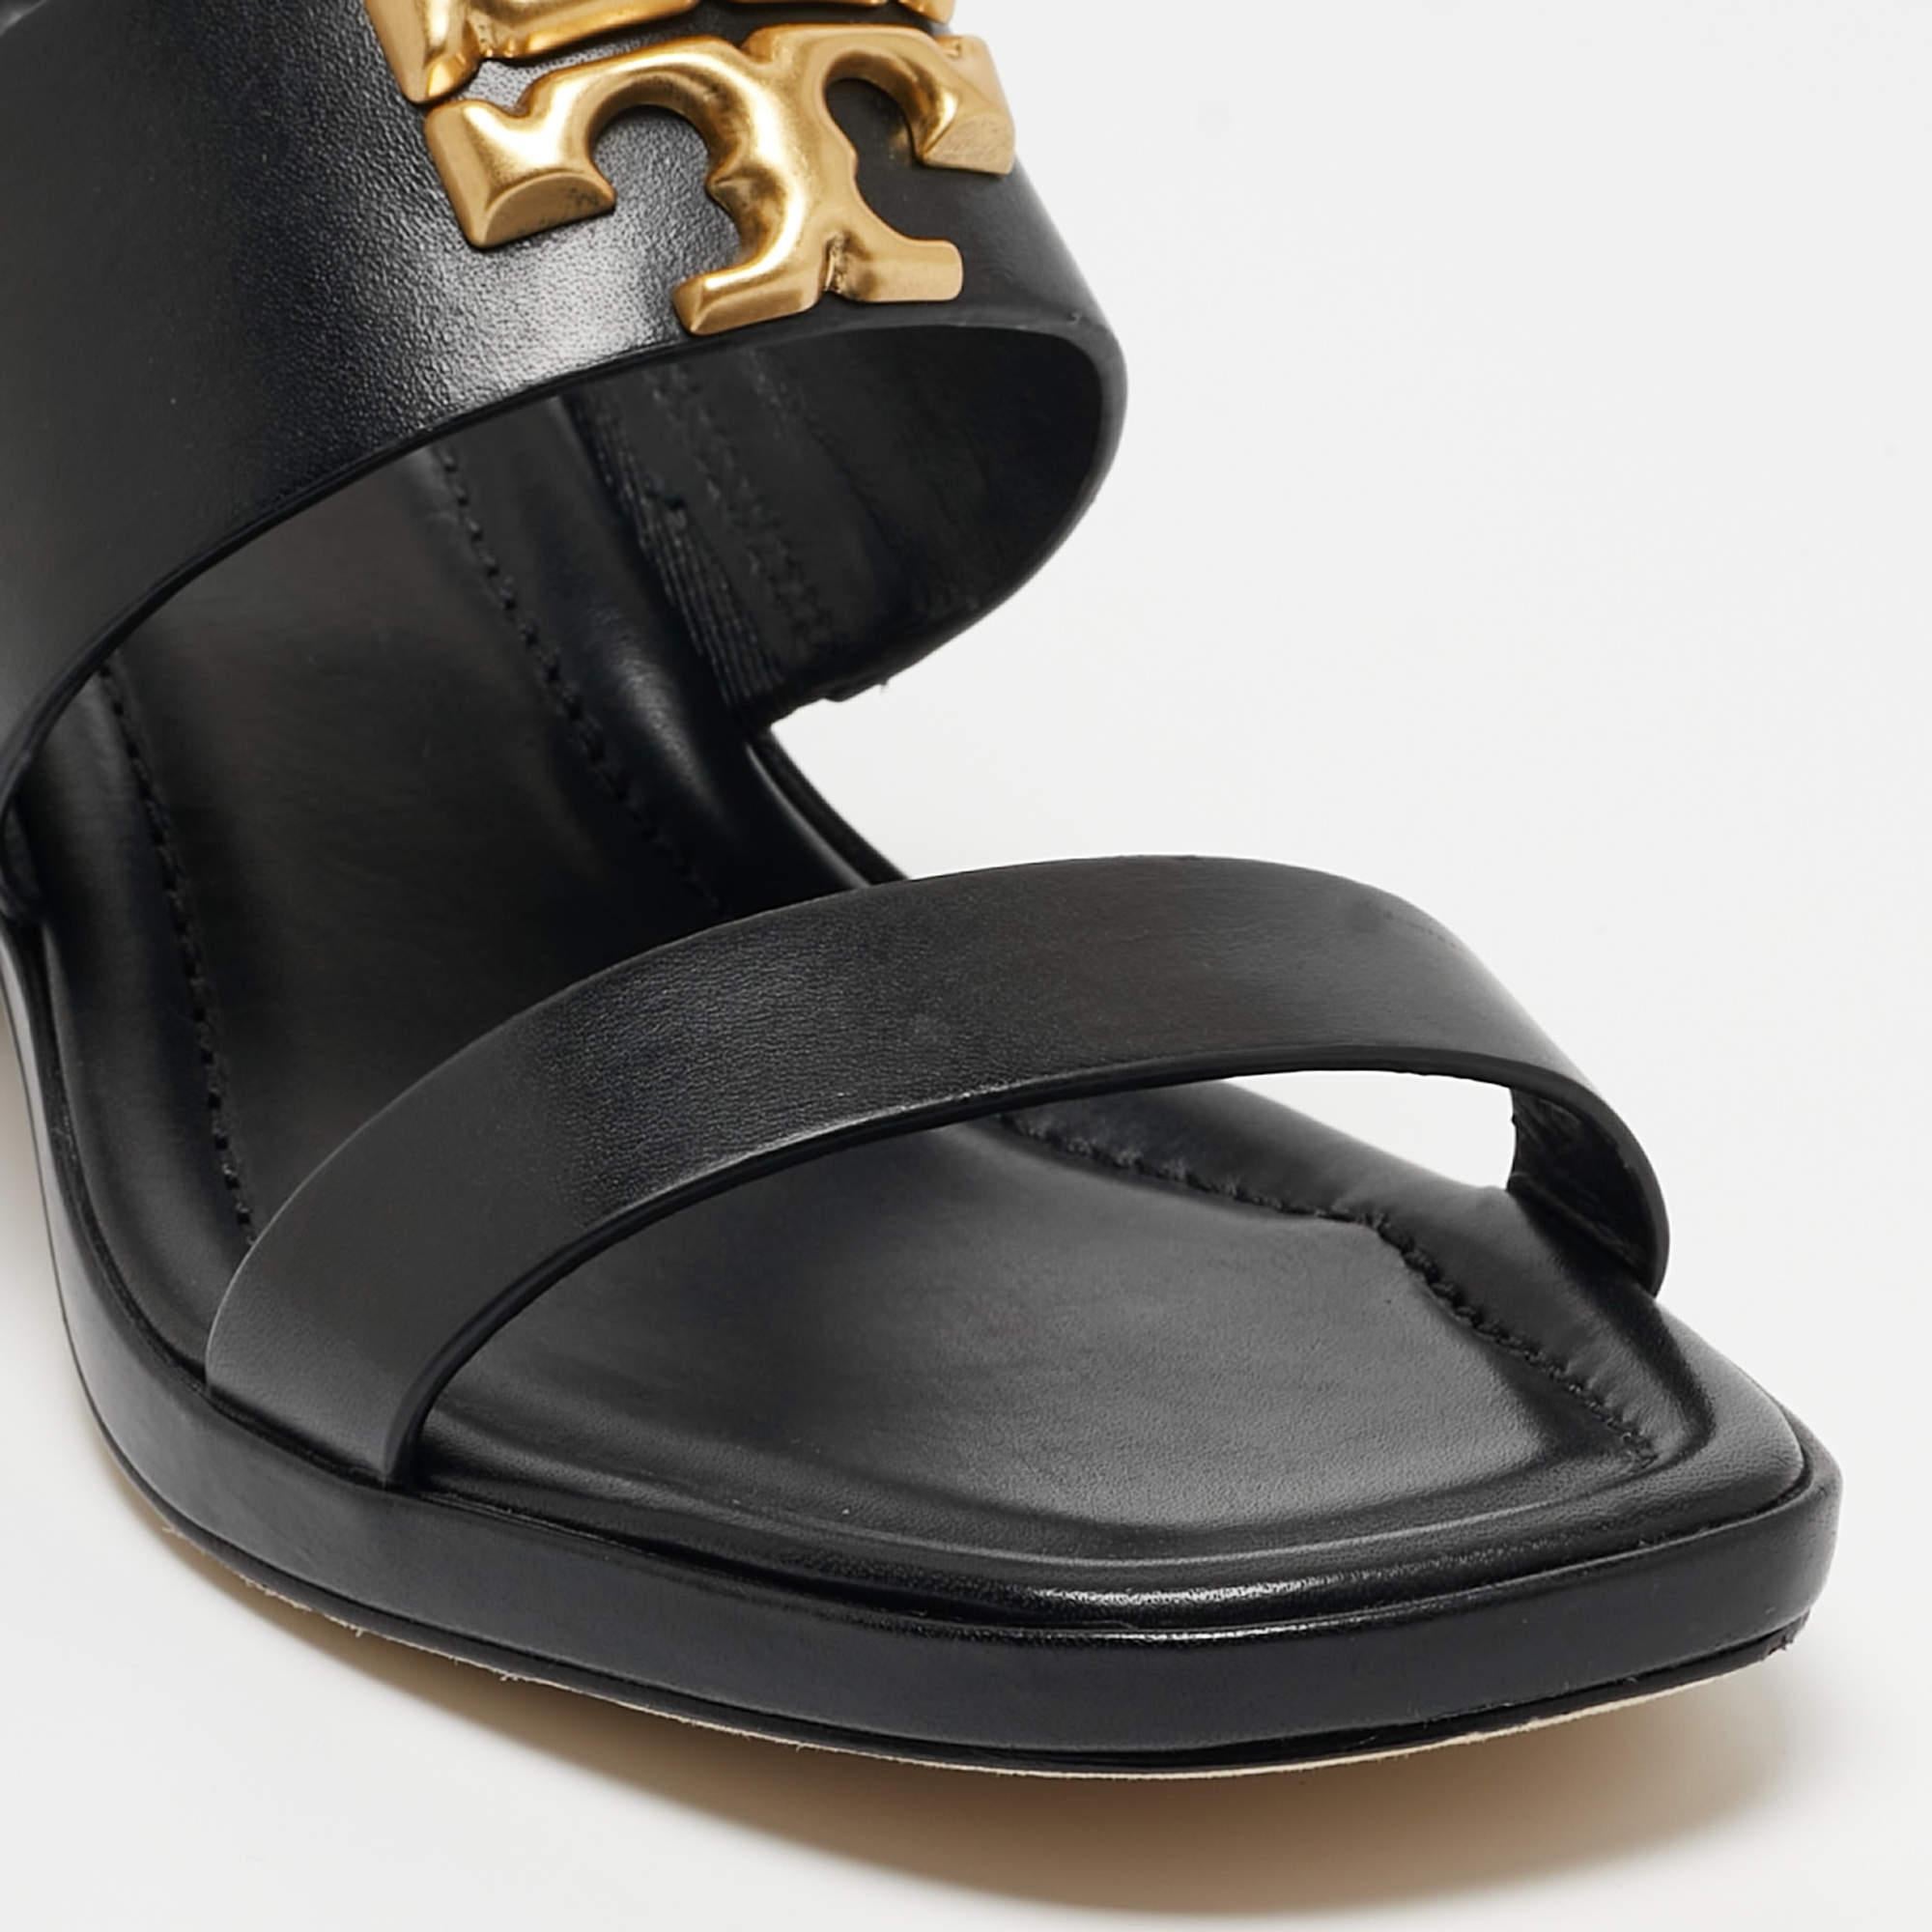 Tory Burch Black Leather Eleanor Slingback Sandals Size 39 3